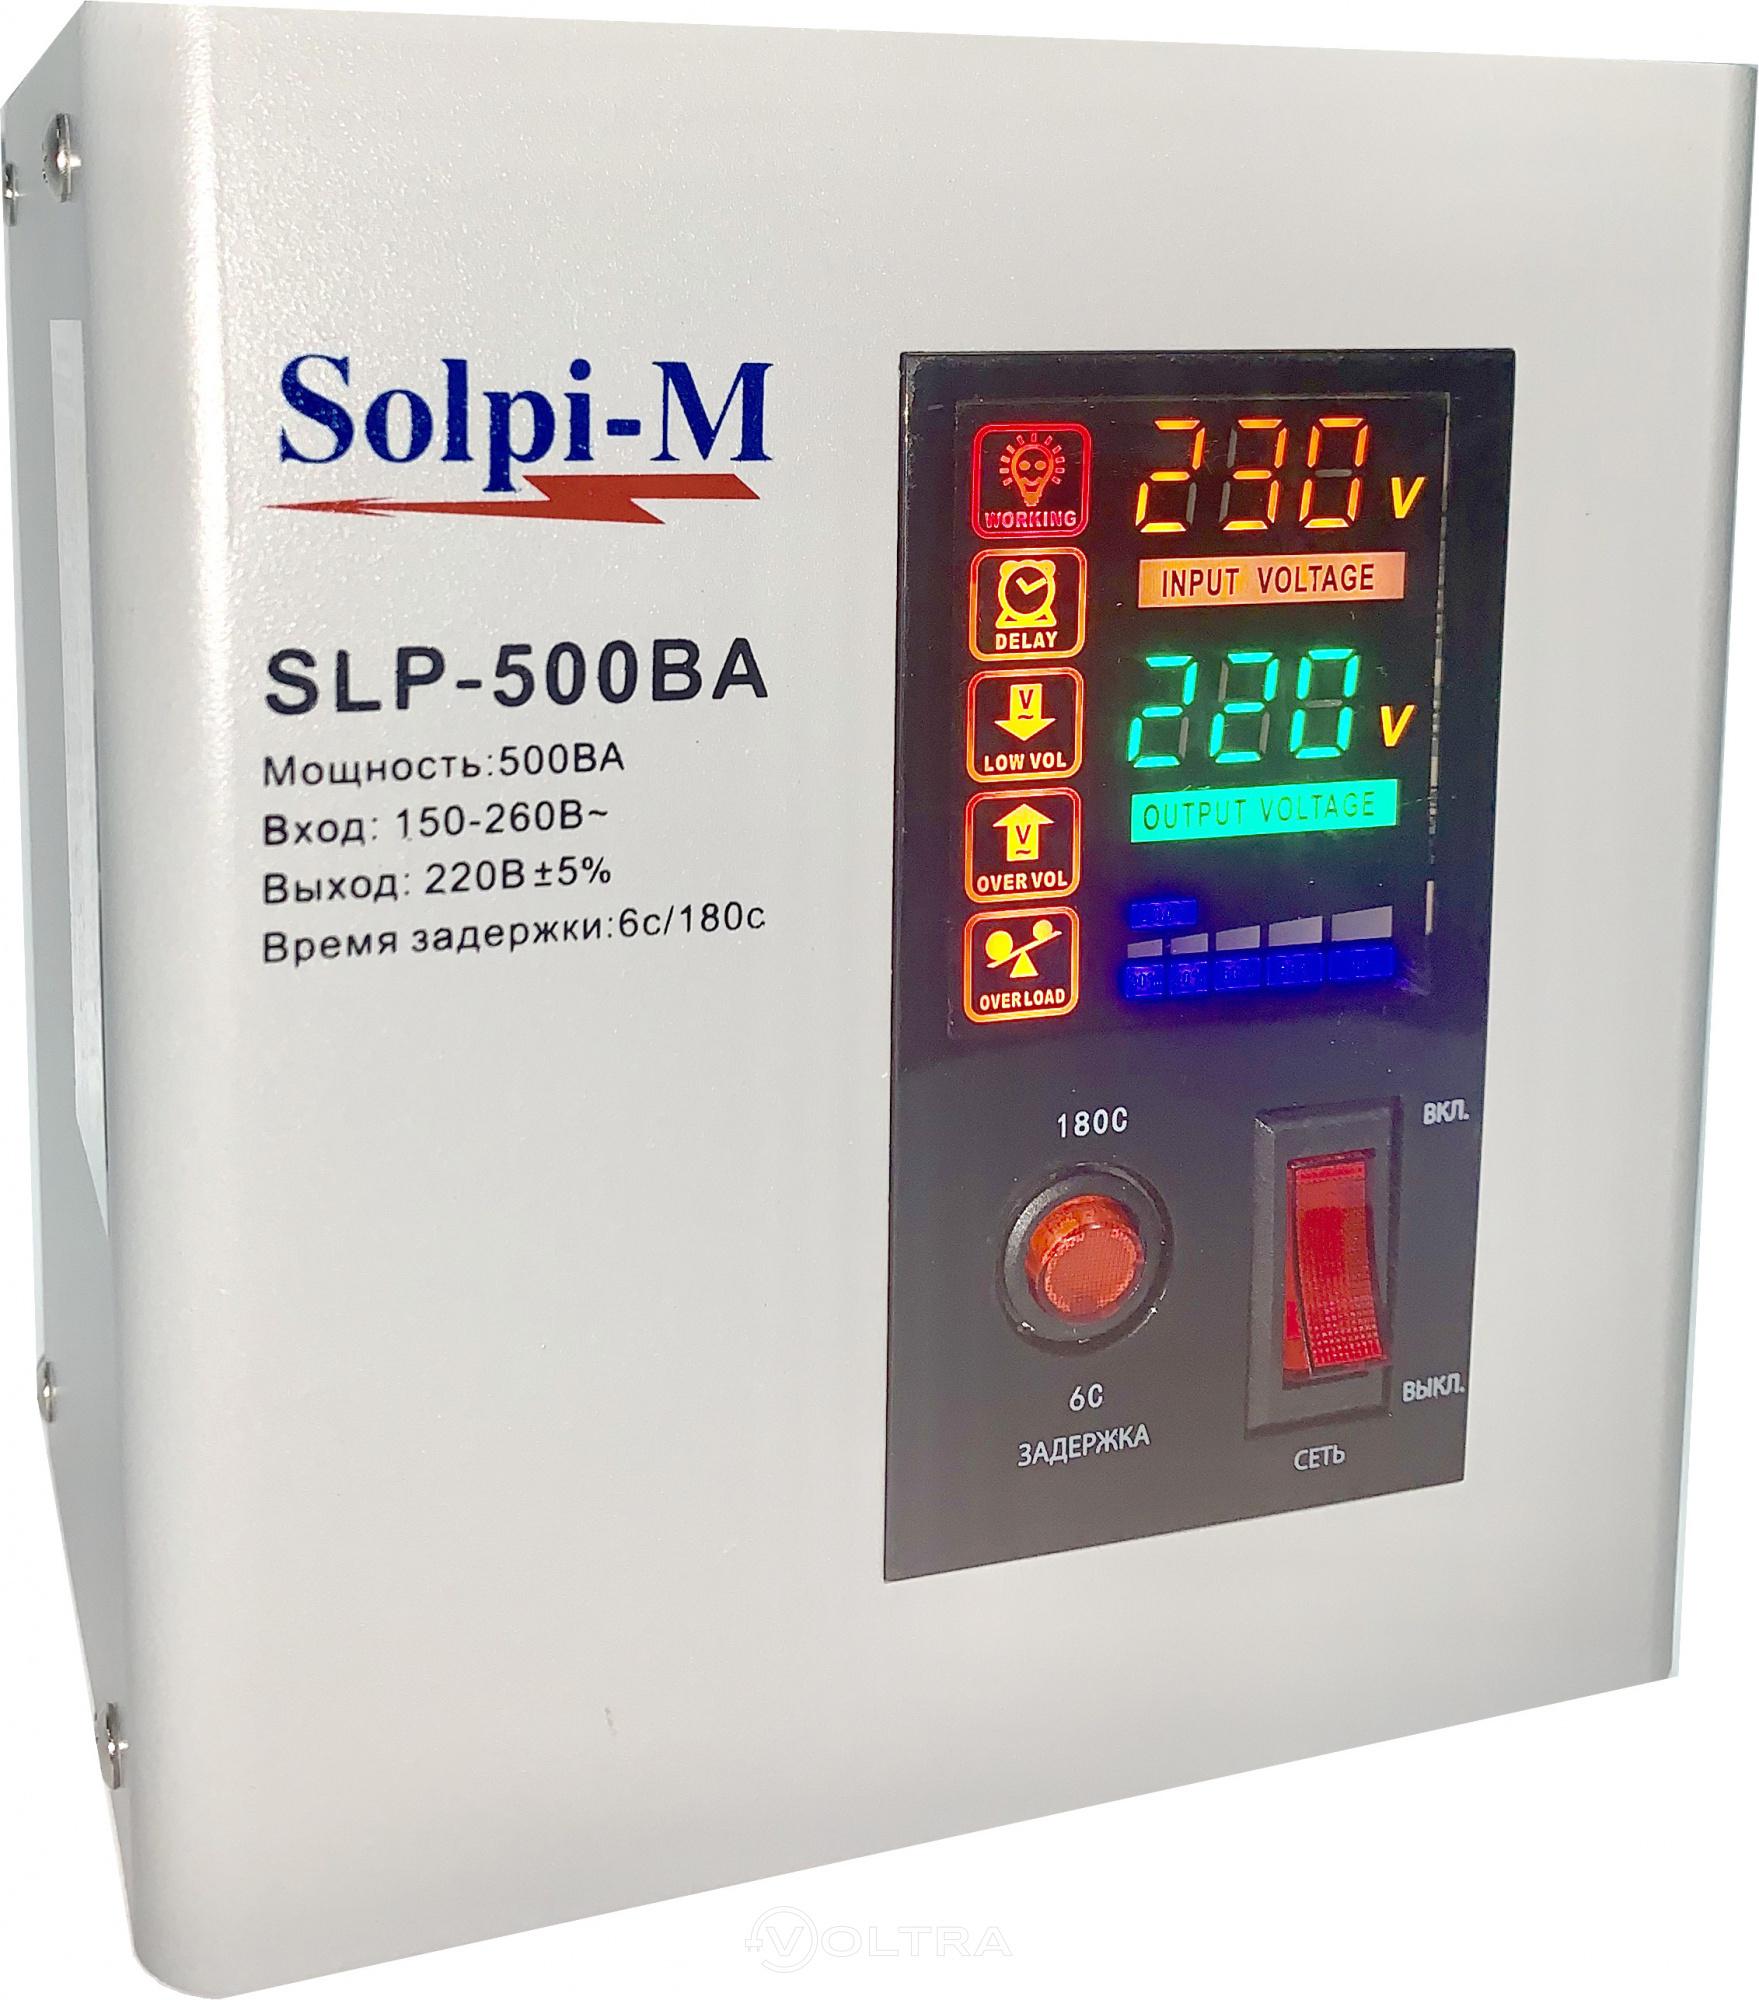 Solpi-M SLP-500BA